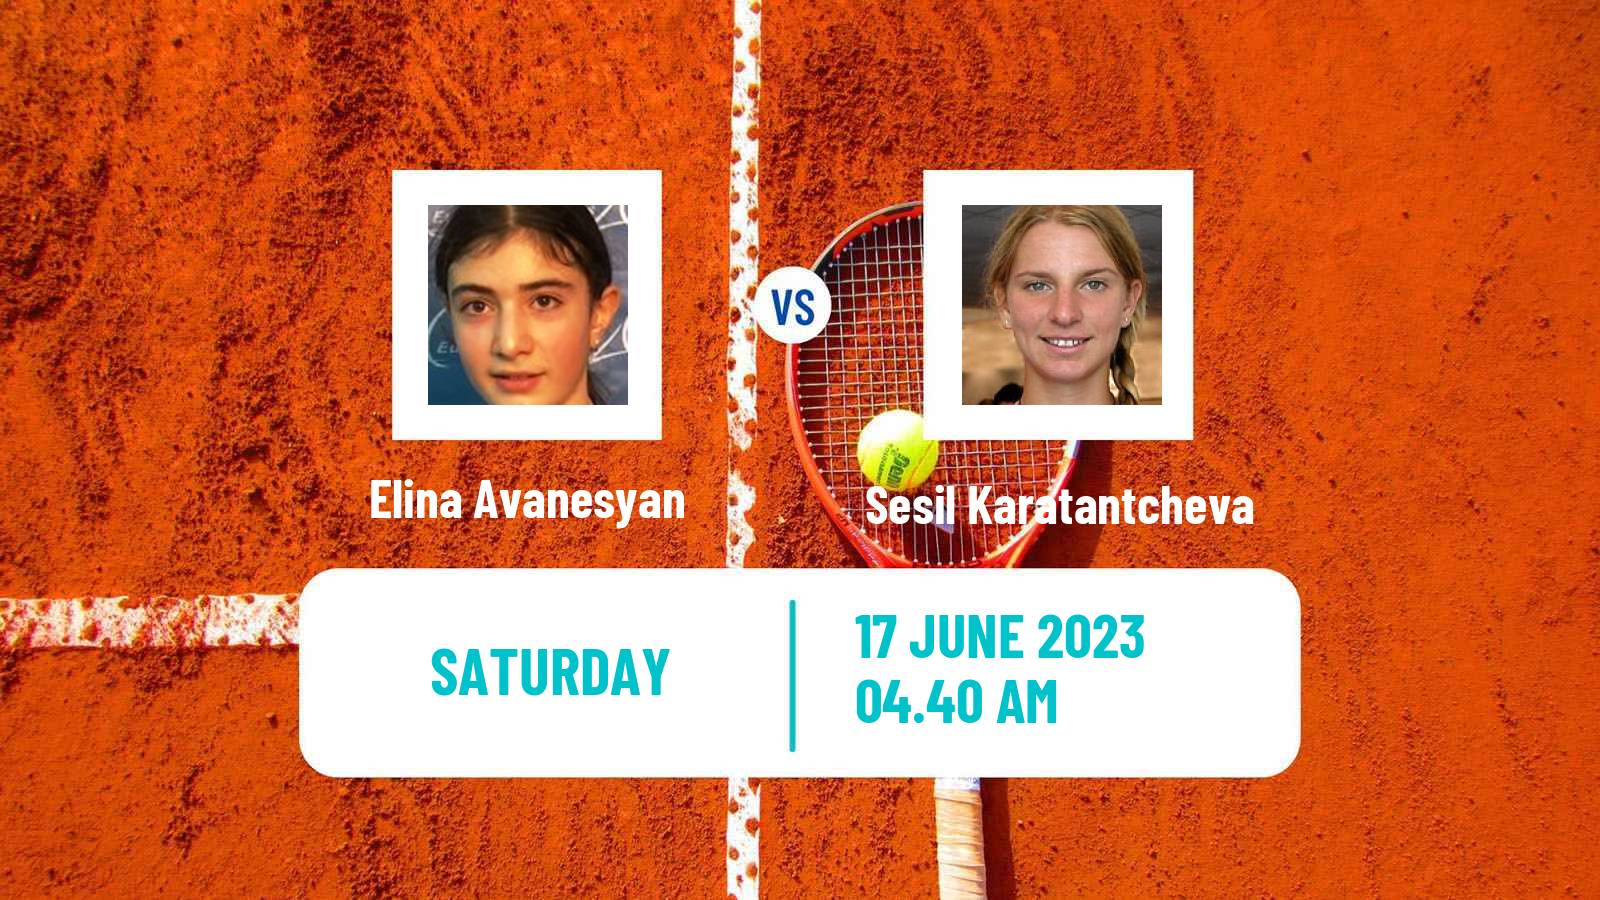 Tennis WTA Berlin Elina Avanesyan - Sesil Karatantcheva